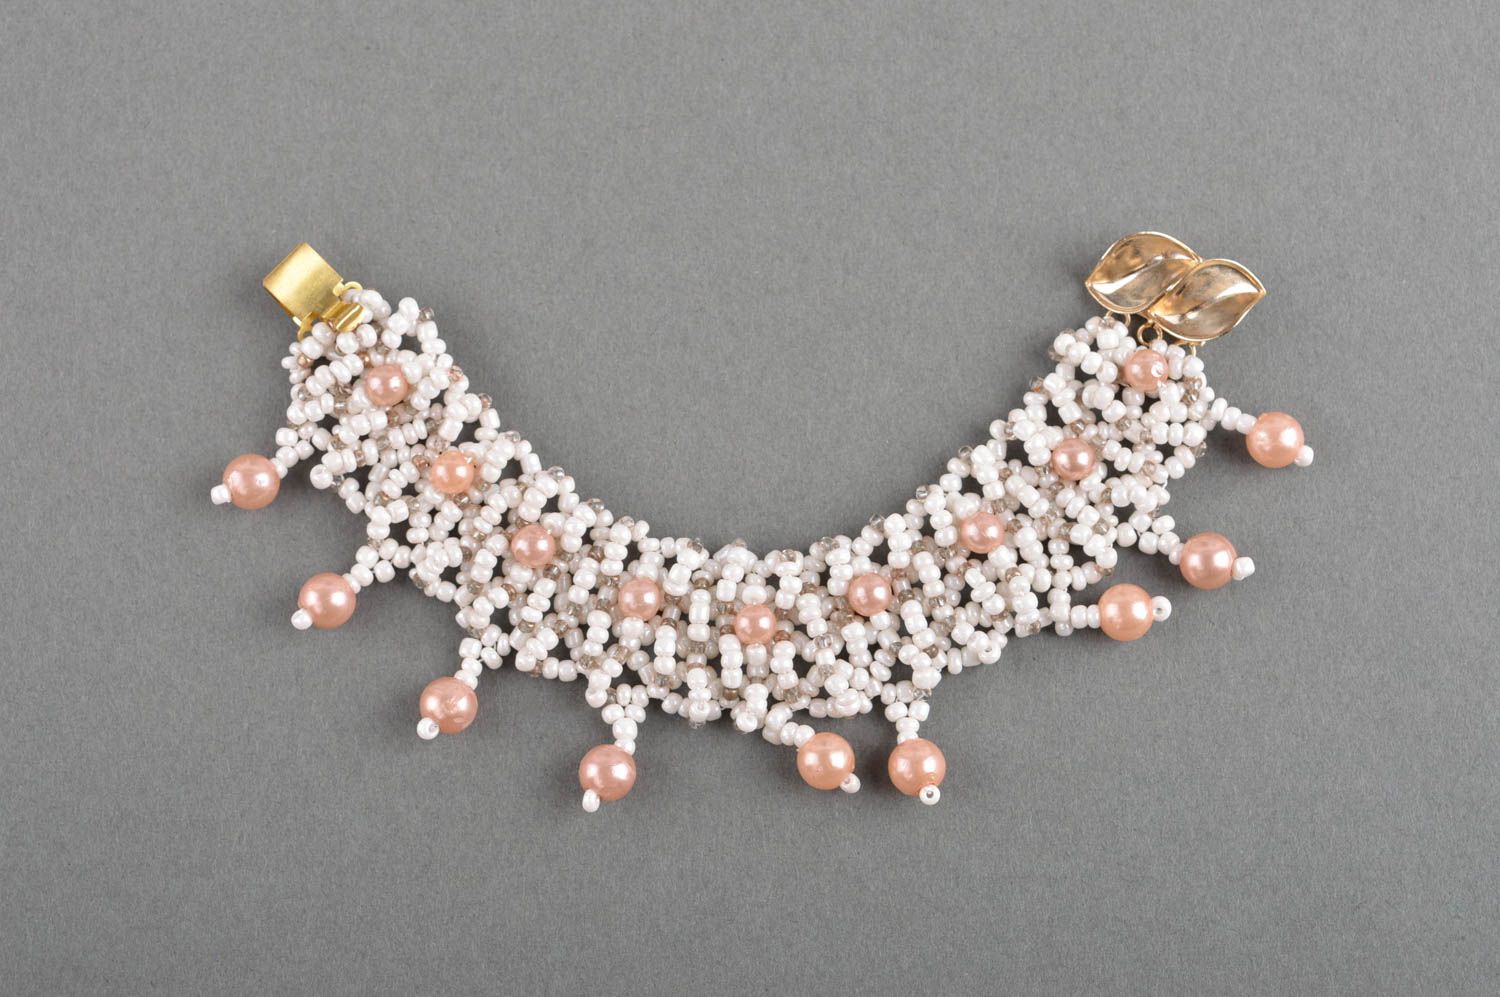 Handmade accessories beautiful jewelry gift ideas unusual gift for women photo 4